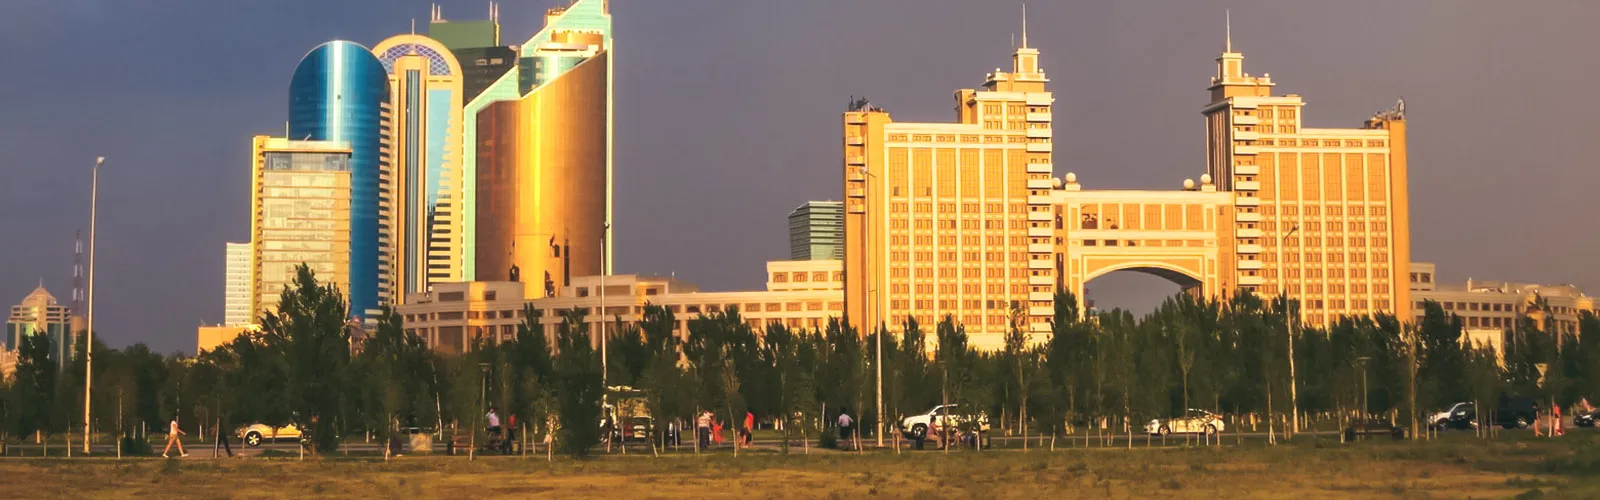 astana kazakhstan